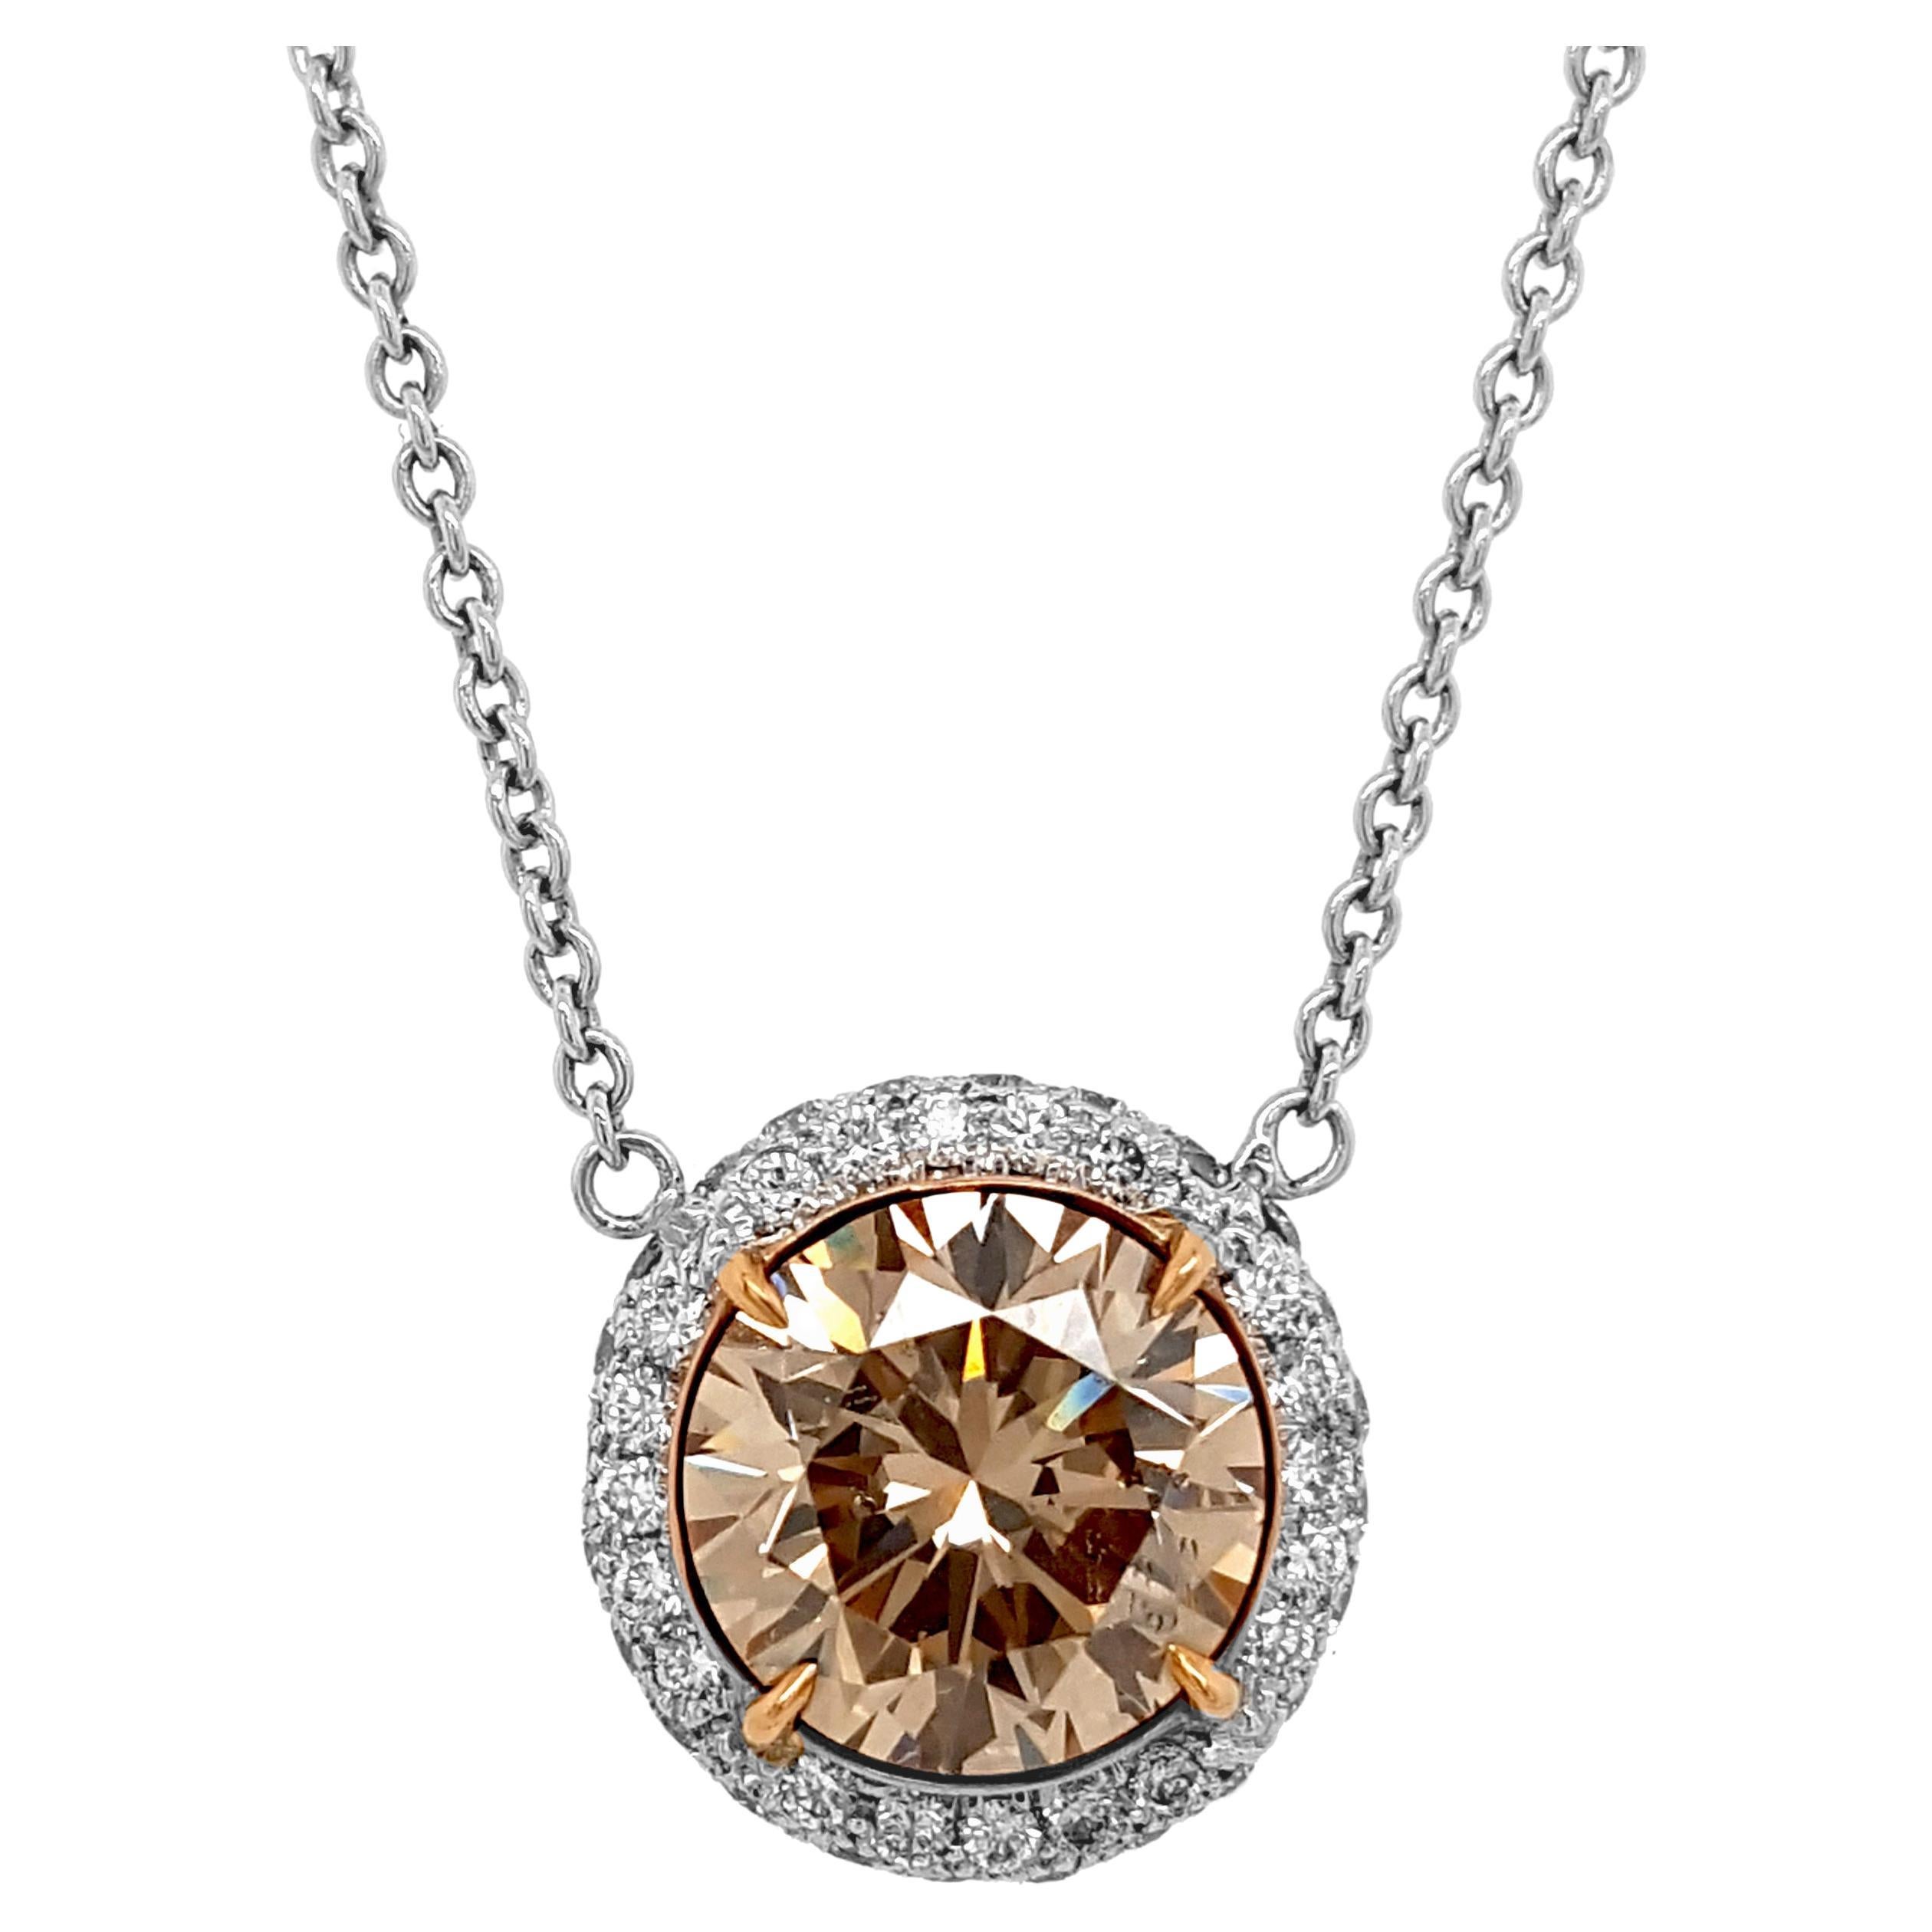 2.53 Carat Round Brilliant Brown Diamond Halo Pendant Necklace, Set in 18K Gold. For Sale